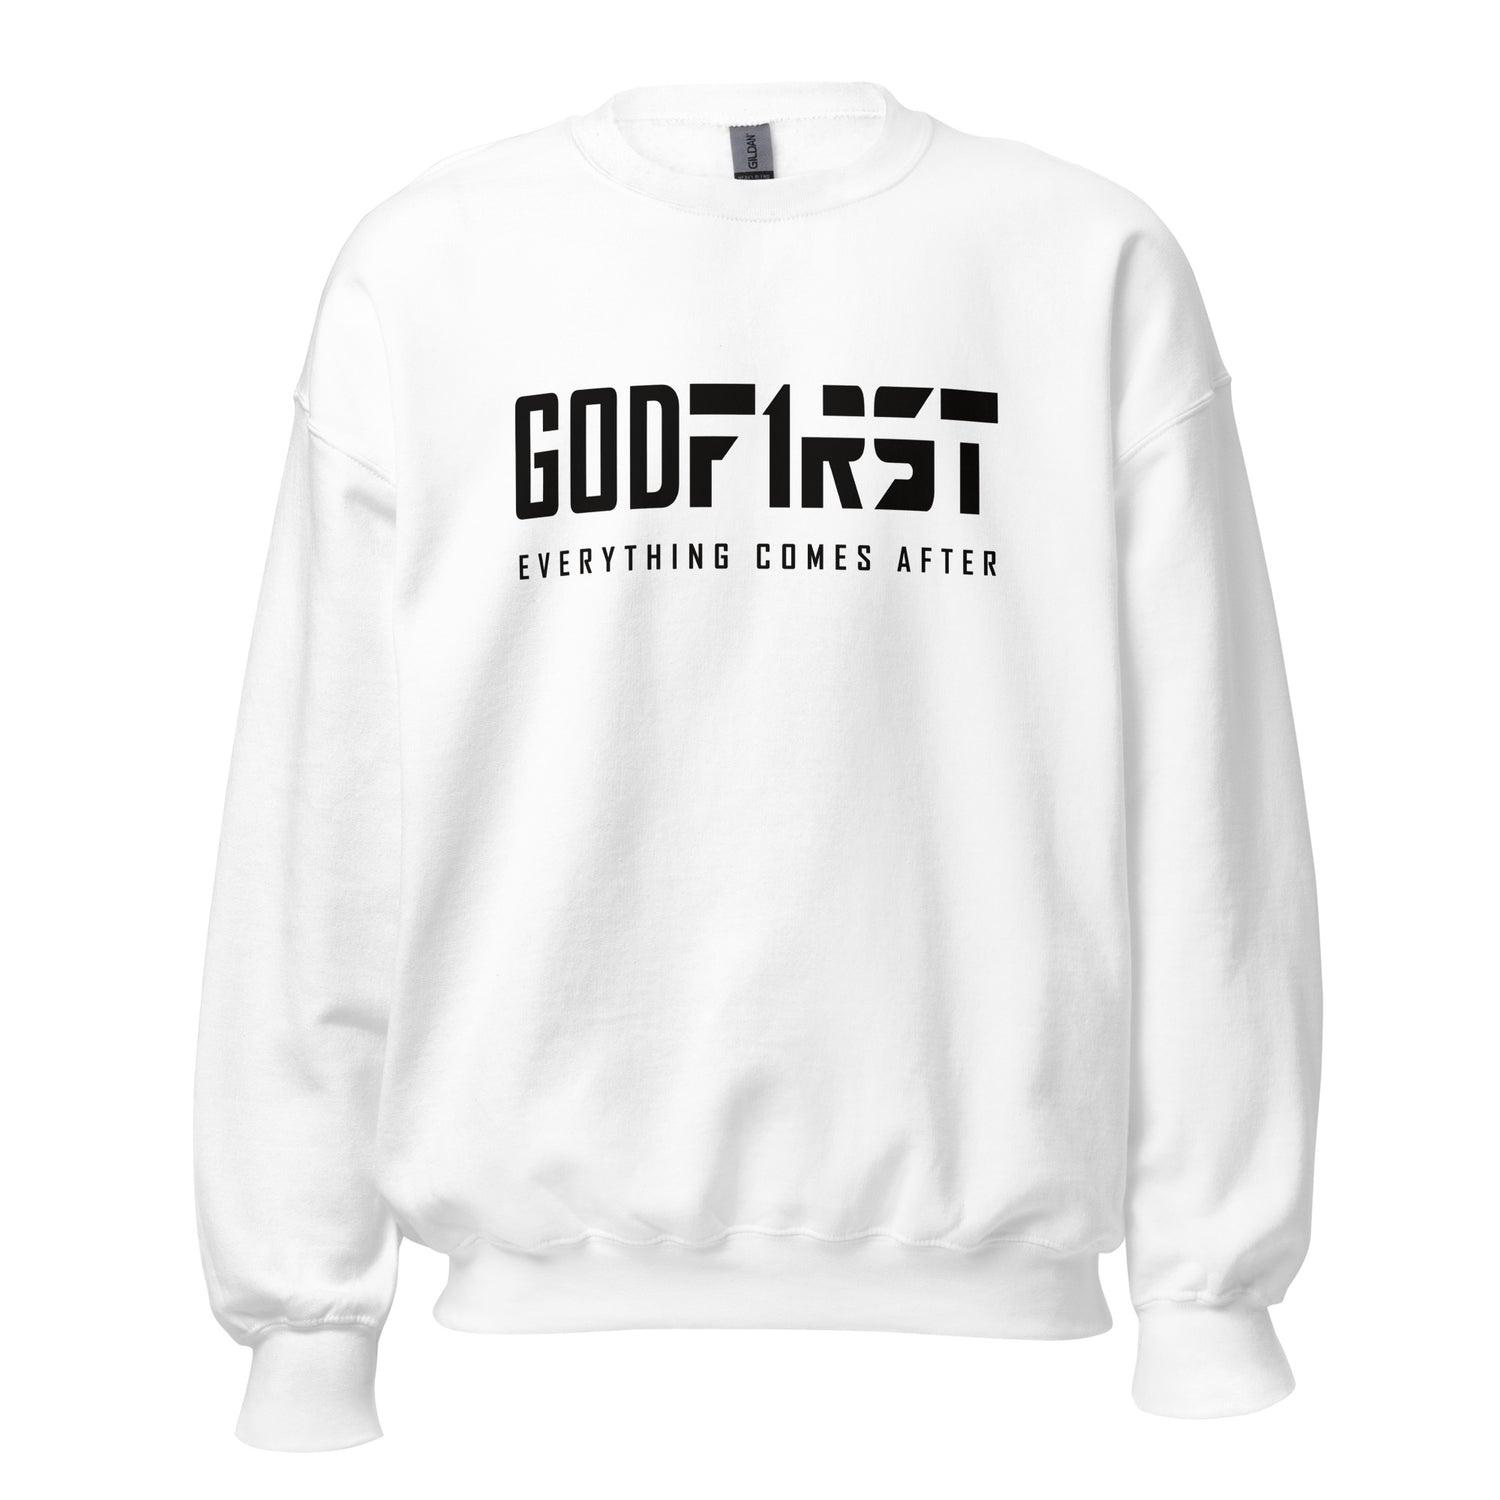 God First Sweatshirt